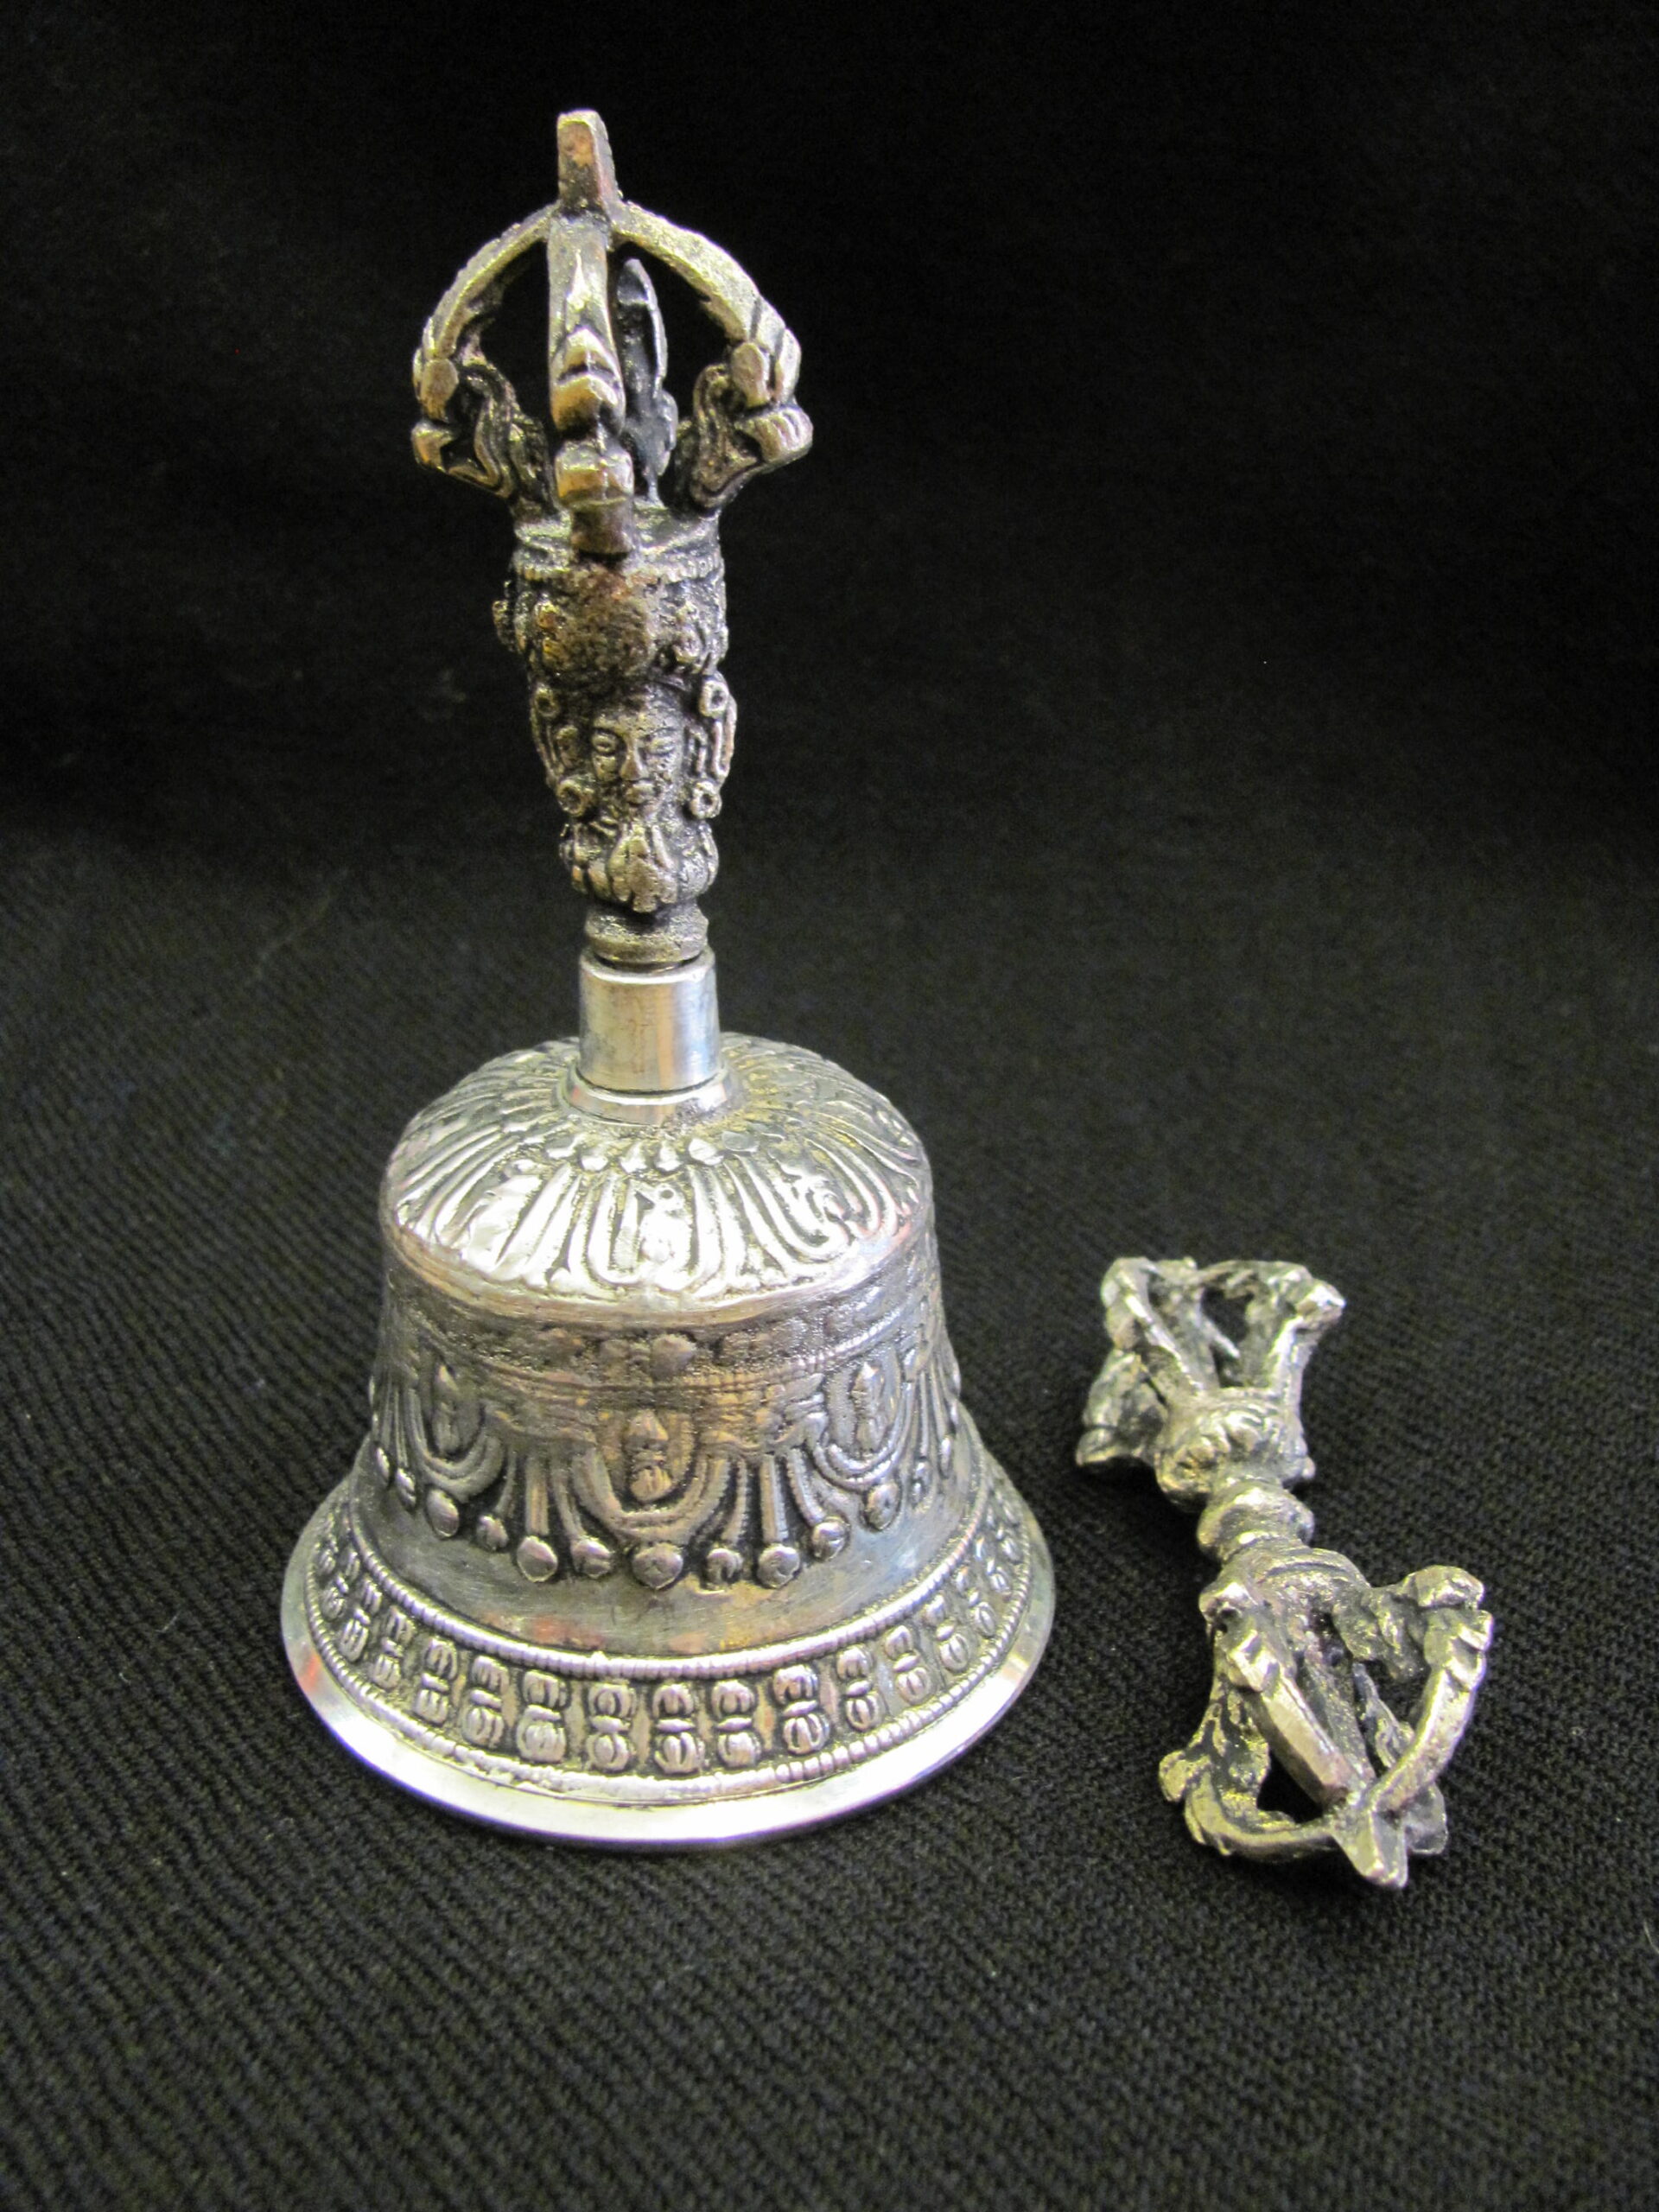 Buy GoldGiftIdeas Silver Plated Decorative Lakshmi Diya Pooja Thali Set  (Kamakshi Diya), Pooja Items for Home Decoration, Decorative Diya for  Pooja, Small Home Function Return Gift with Potli Bag Online at Low